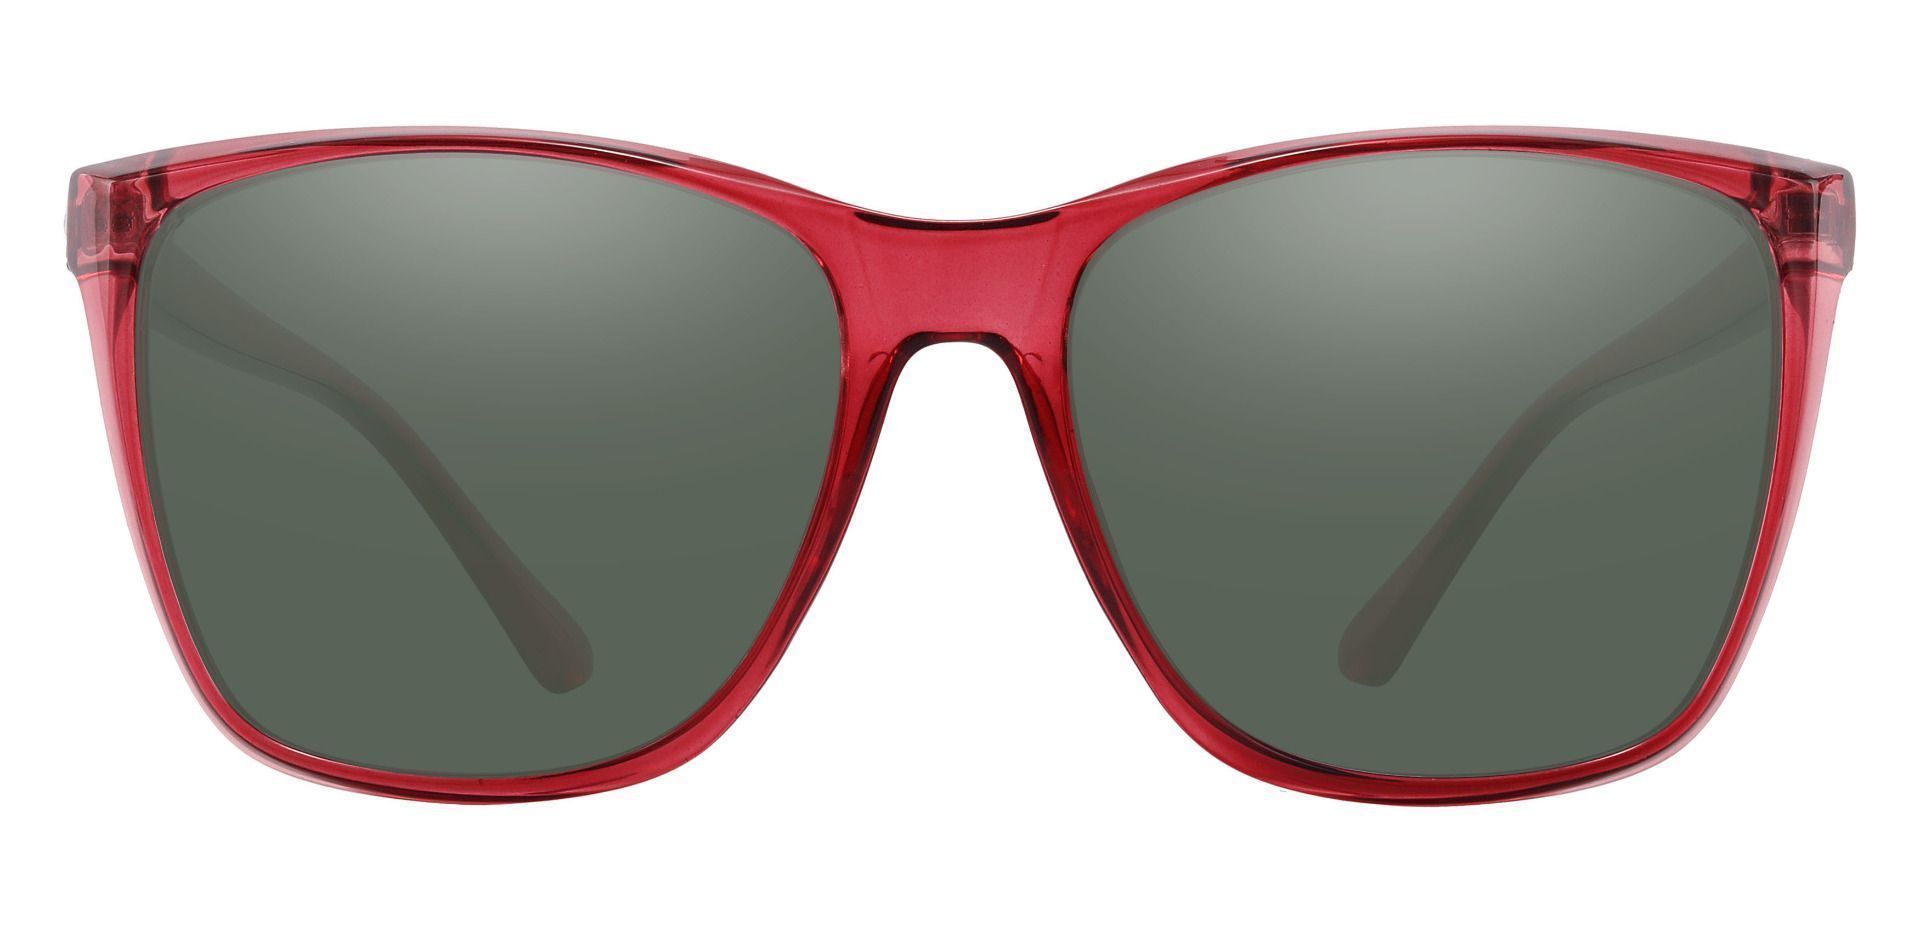 Taryn Square Prescription Sunglasses - Red Frame With Green Lenses